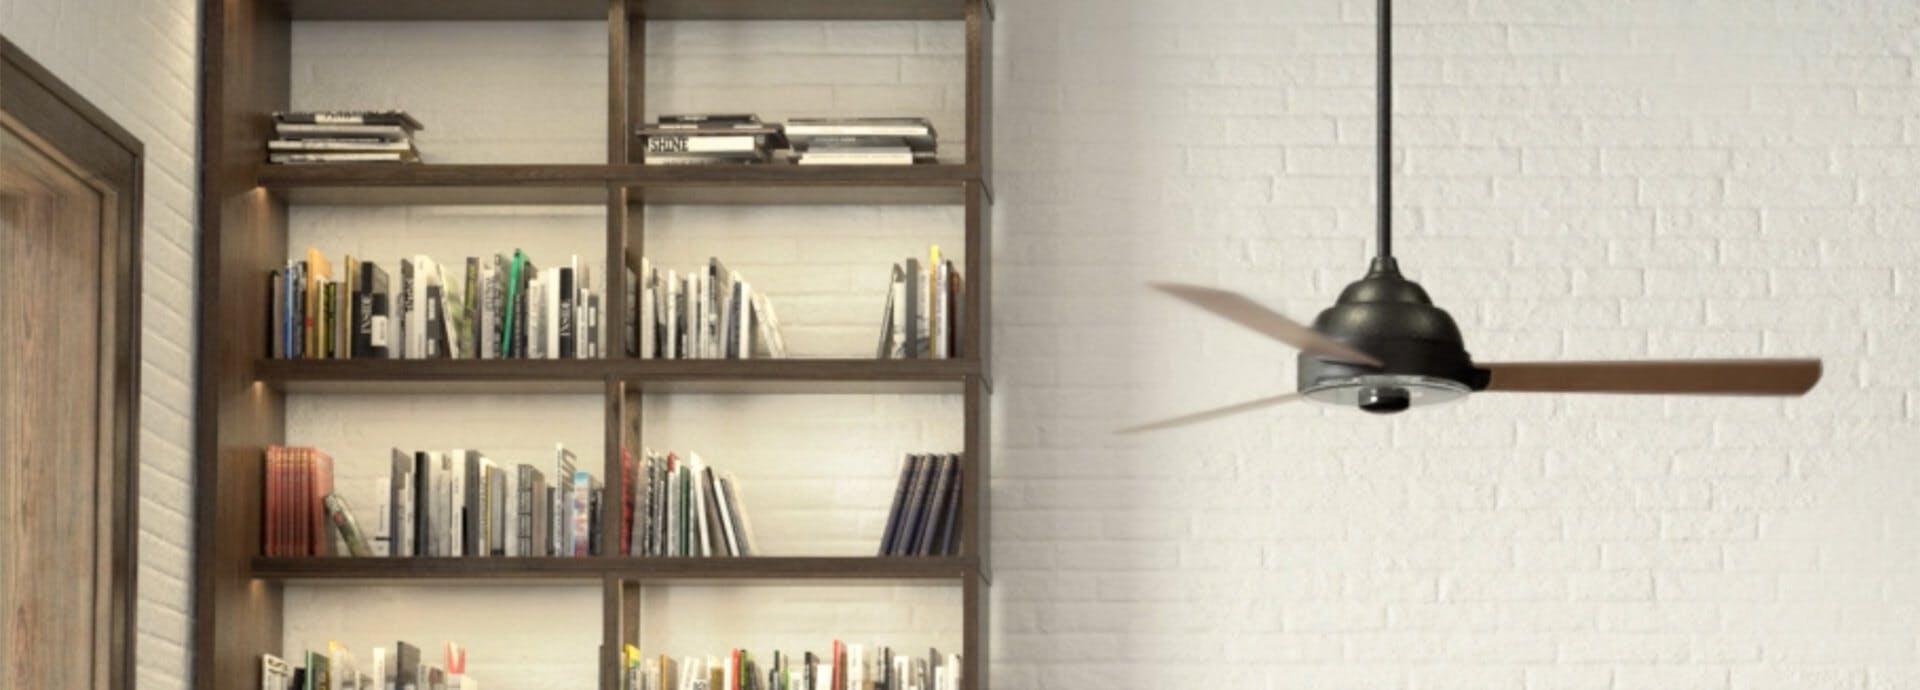 Pinion ceiling fan beside a floor to ceiling wood book shelf